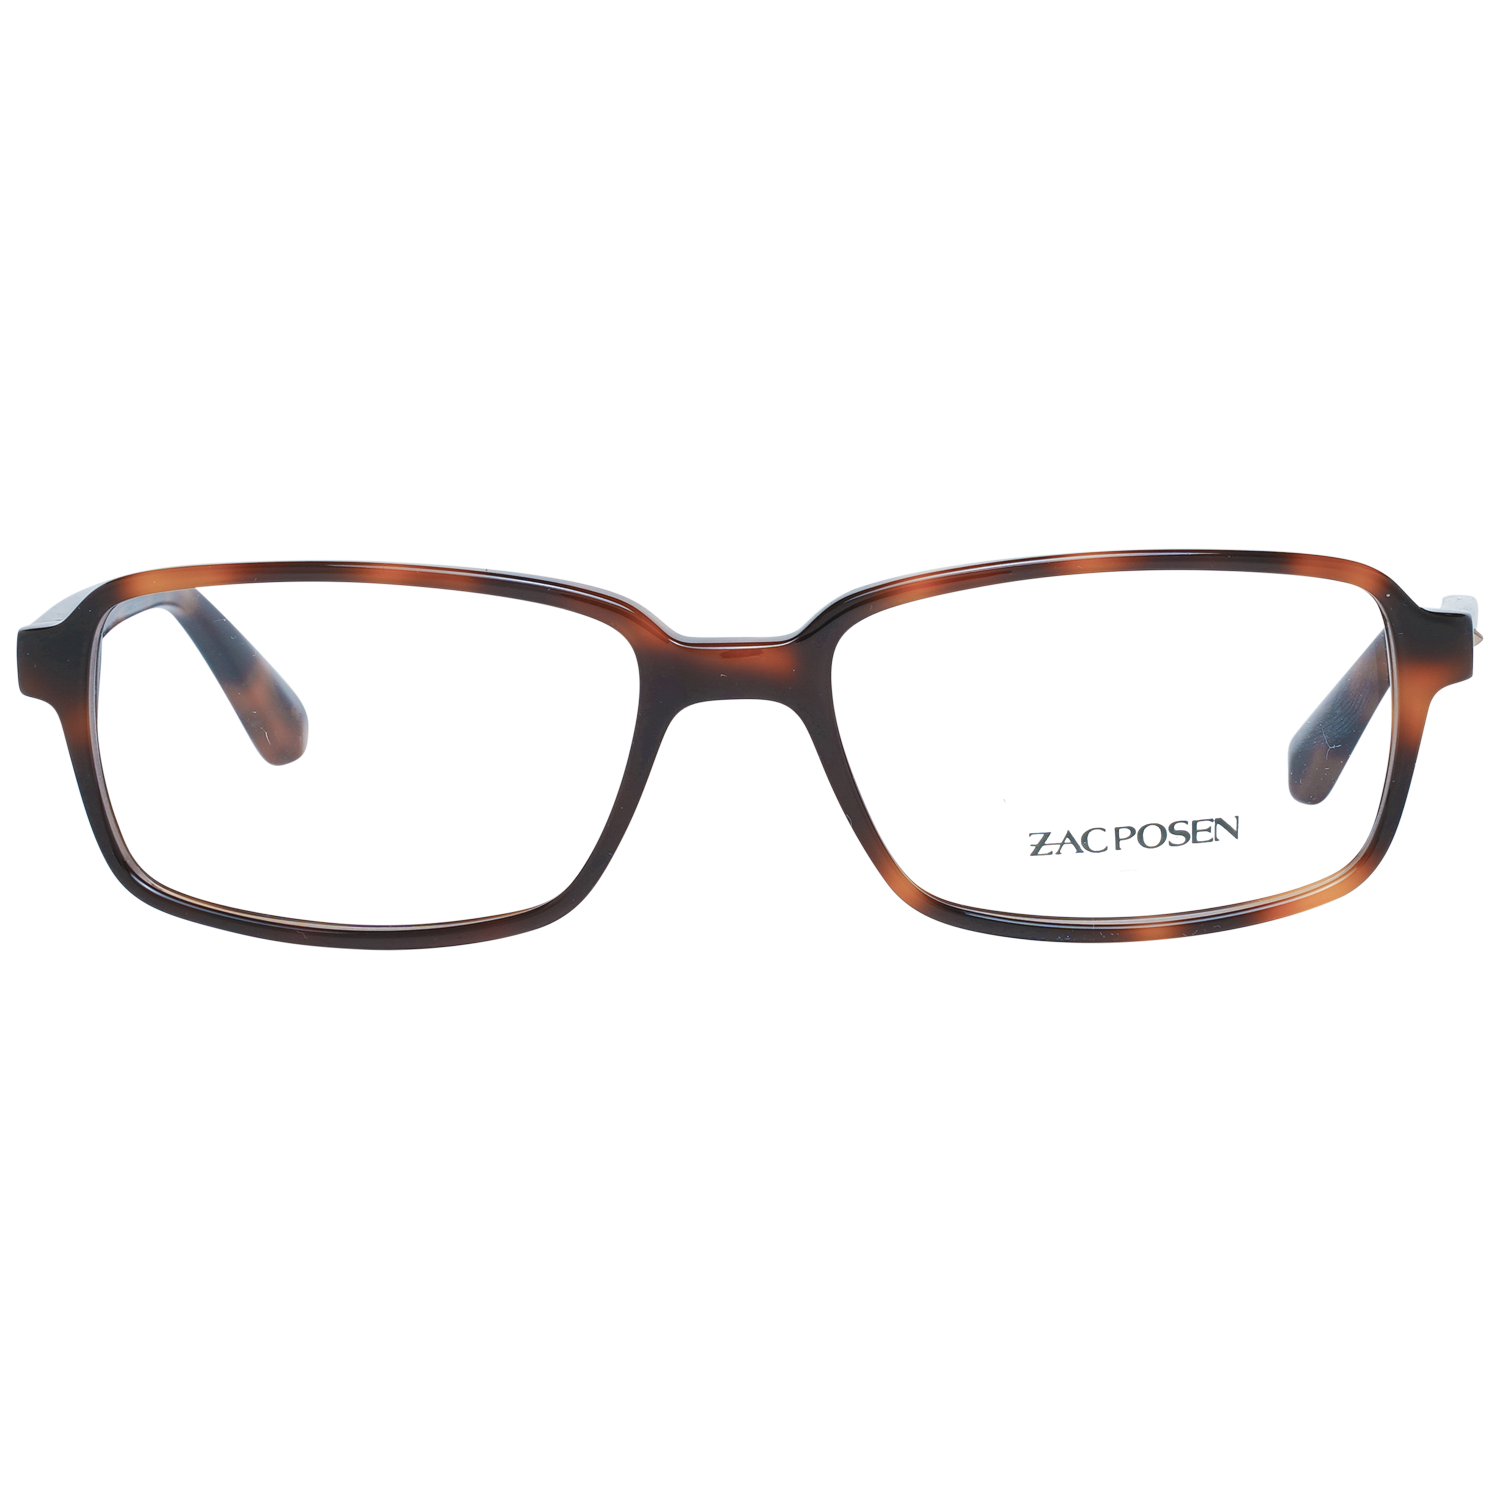 Zac Posen Frames Zac Posen Optical Frame ZMIL TO 53 Milo Eyeglasses Eyewear UK USA Australia 